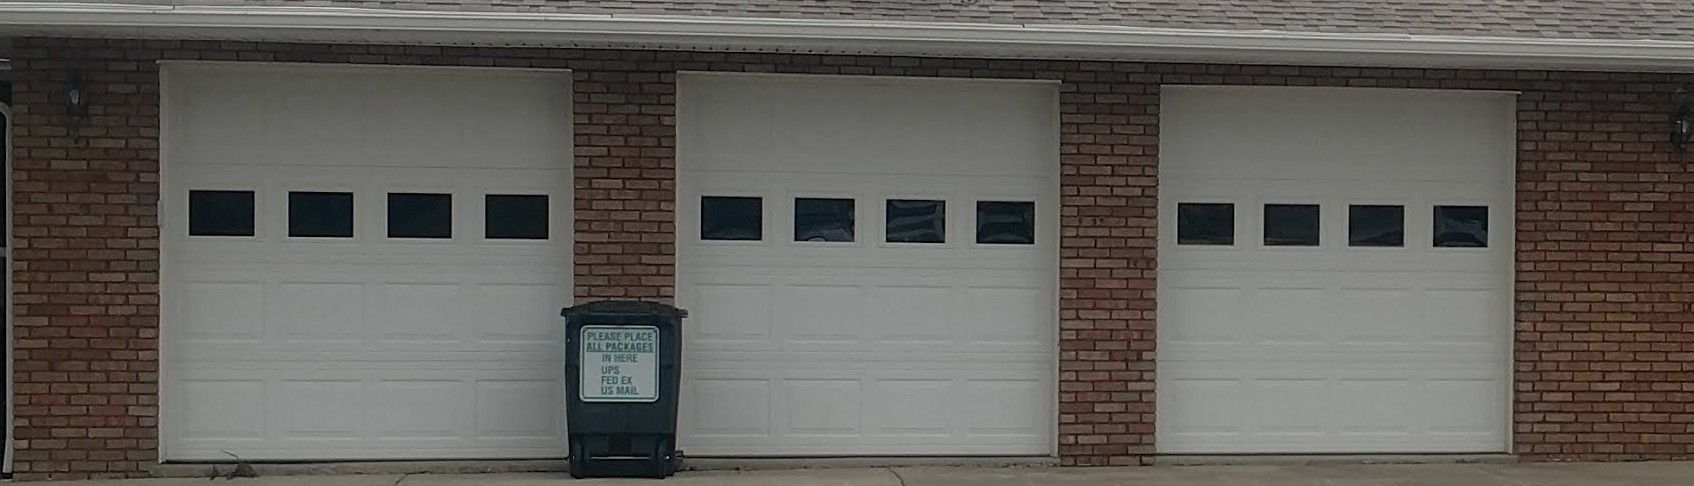 White Wayne Dalton 8300 8'x8' Steel Insulated Garage Door -- Used